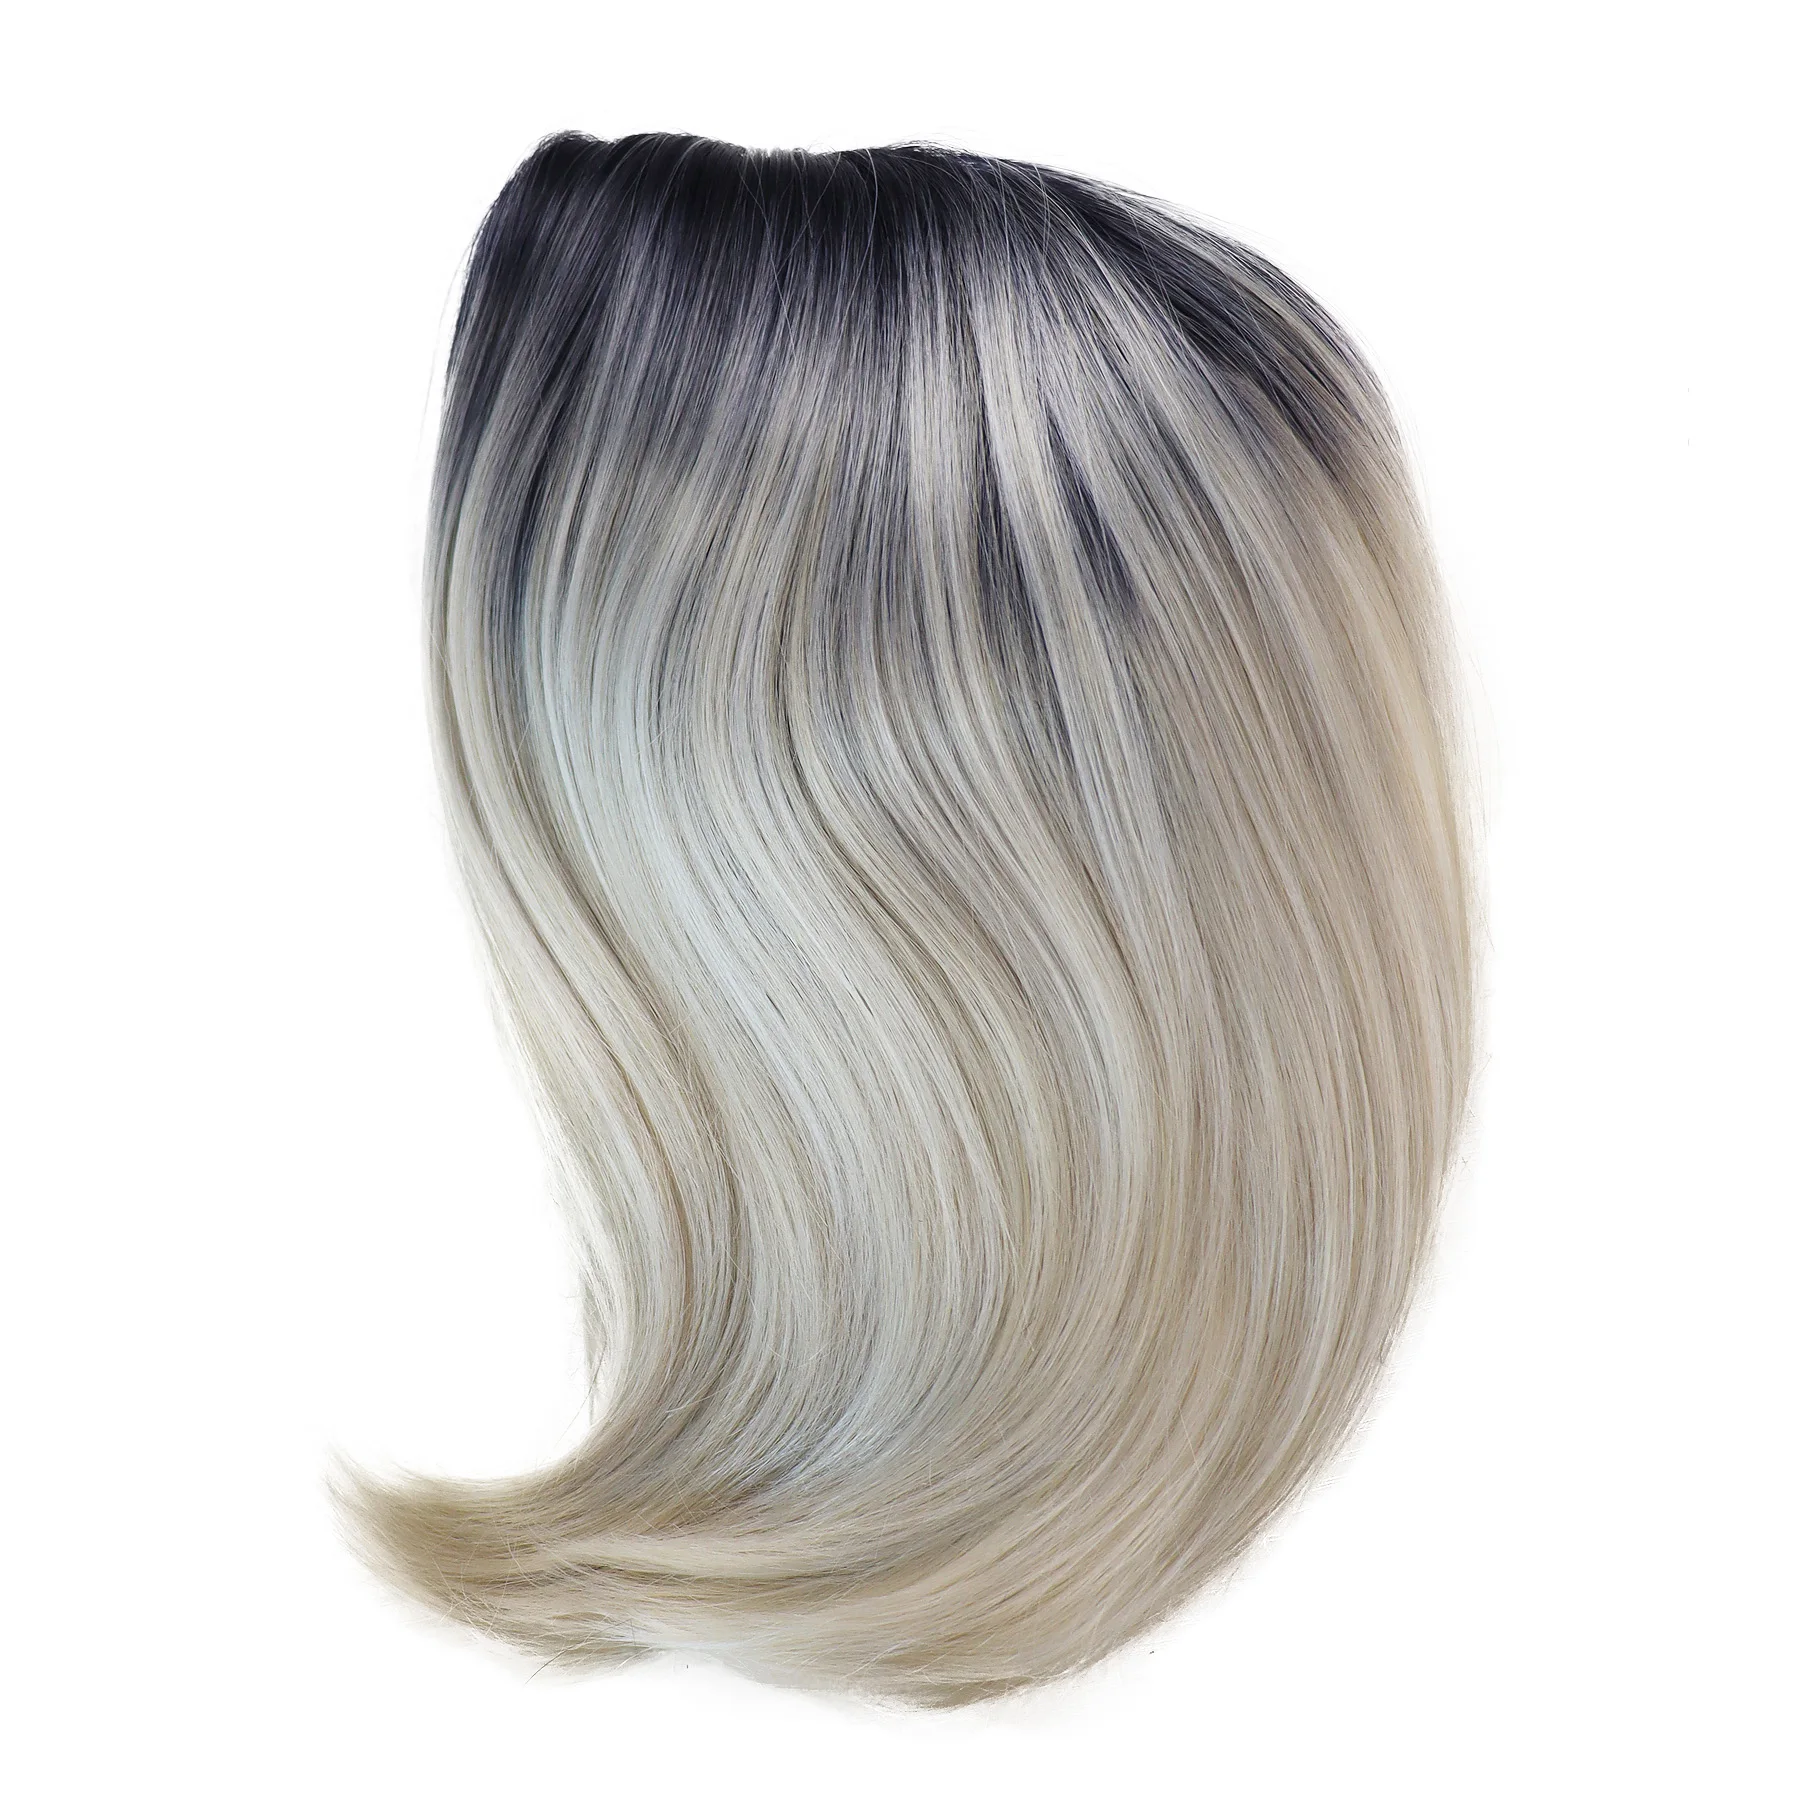 GNIMEGIL סינטטי Ombre פלטינה שיער בלונדיני קצר בוב פאה לנשים ילדה רך טבעי ישר תסרוקת יומי המפלגה Cosplay - 4